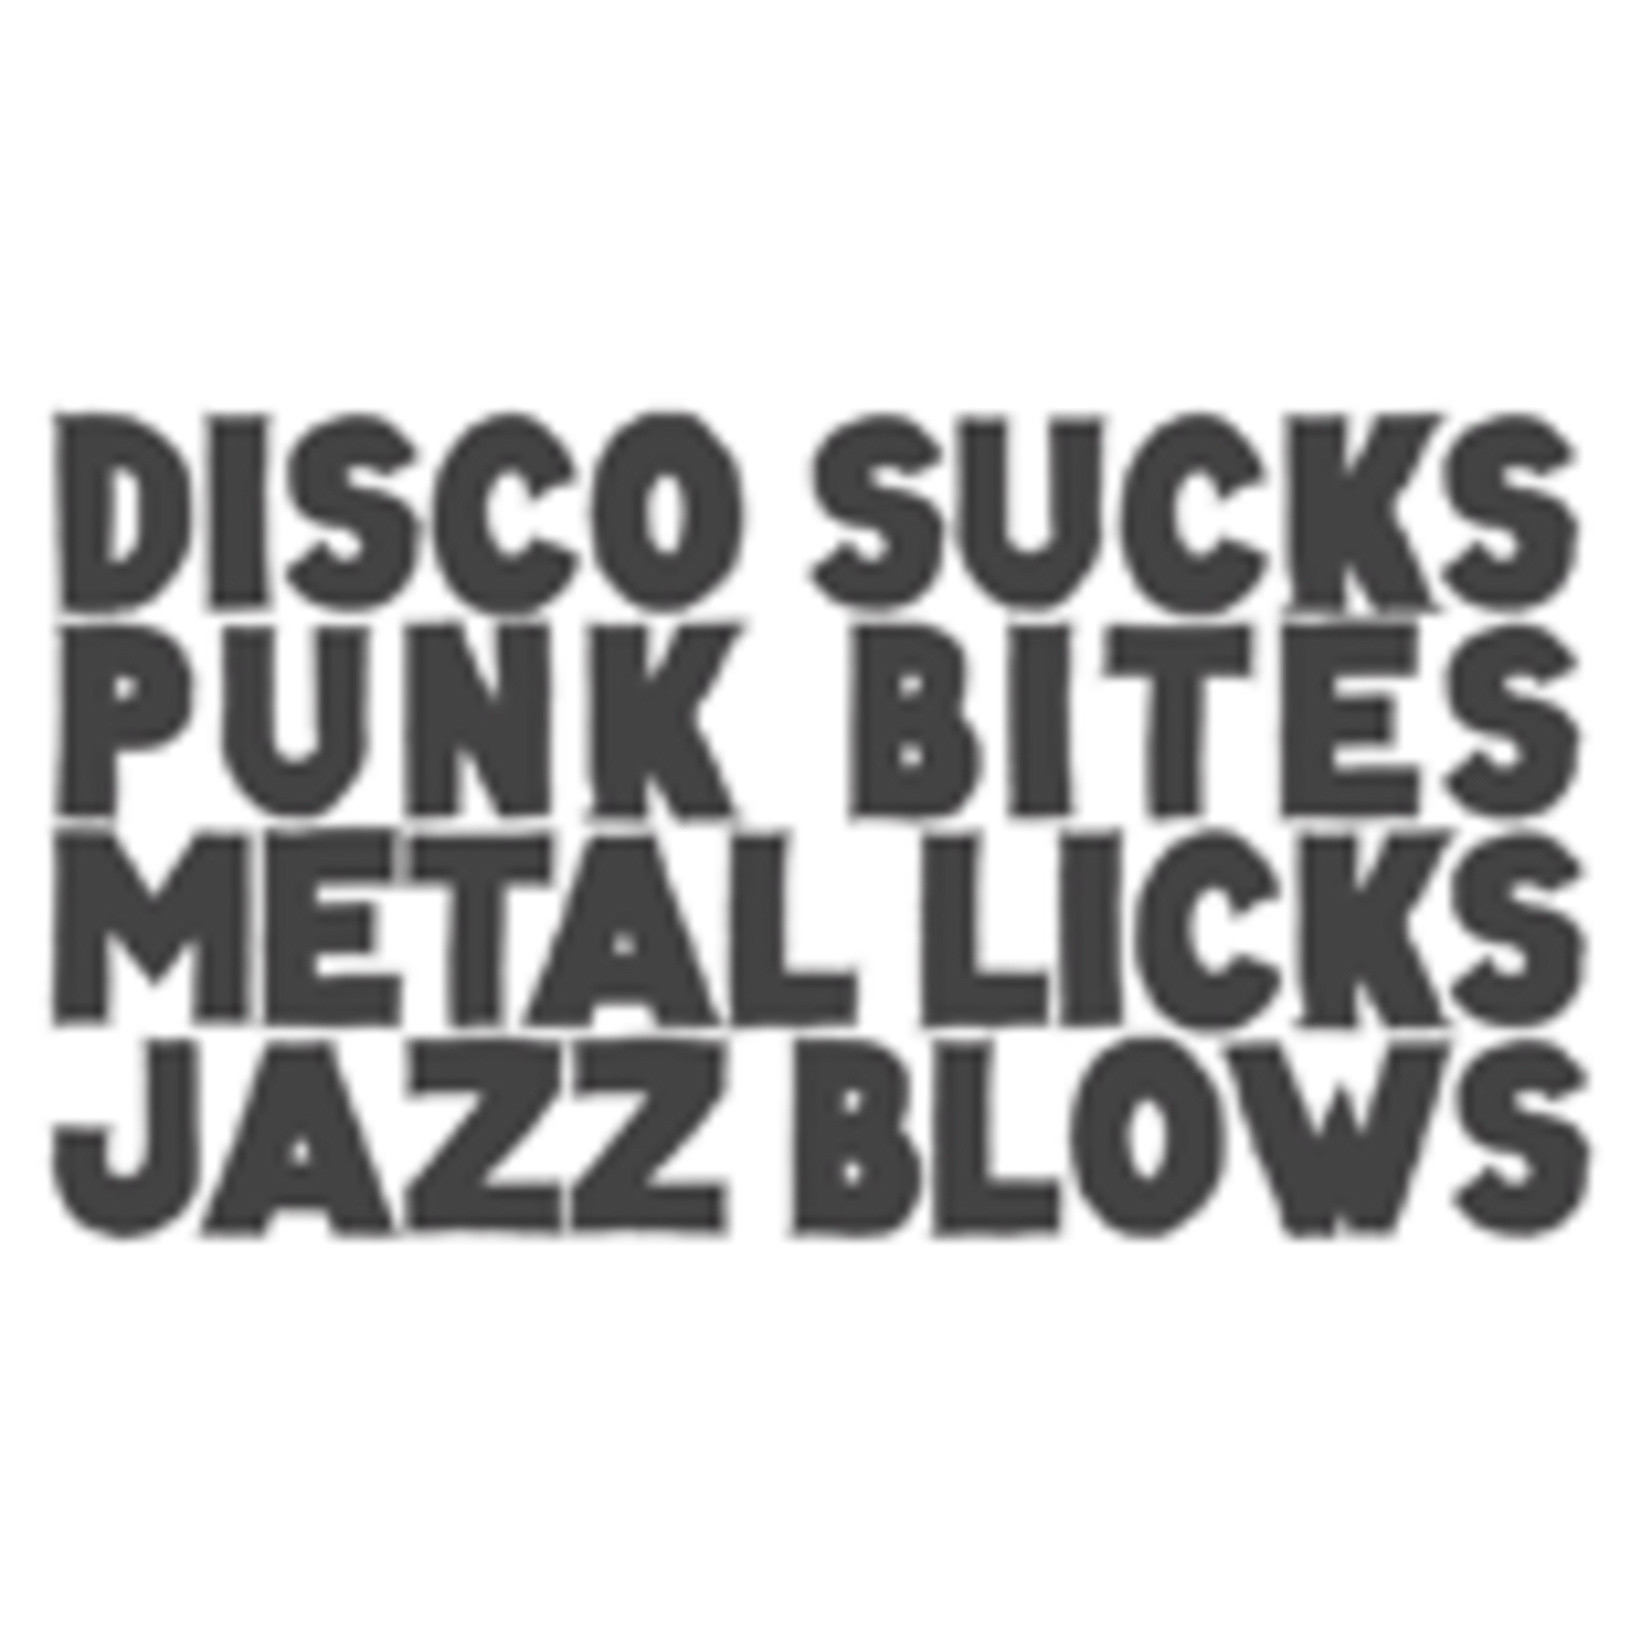 Sticker - Disco Sucks. Punk Bites. Metal Licks. Jazz Blows.